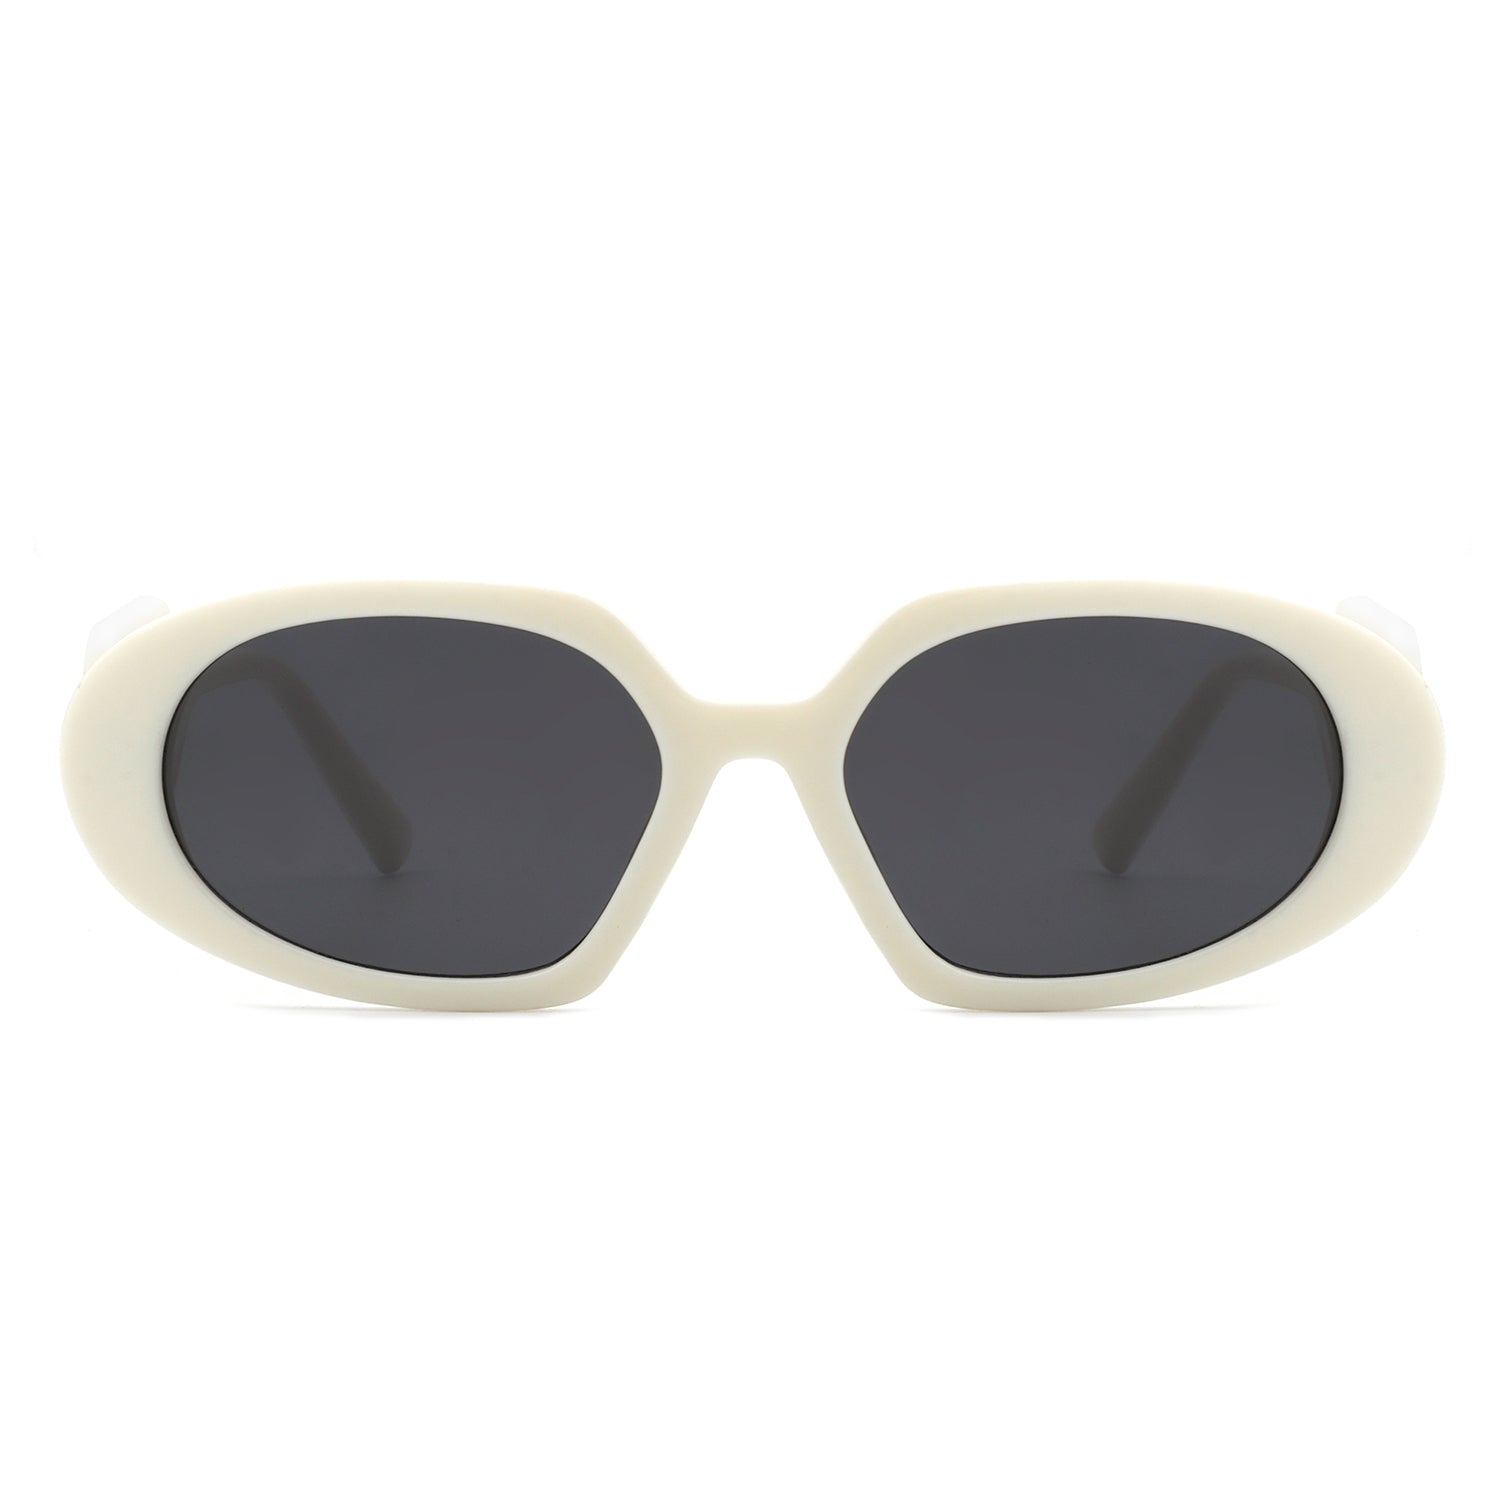 HS2071 - Rectangle Retro Oval Chic Round Lens Leaf Design Fashion Sunglasses